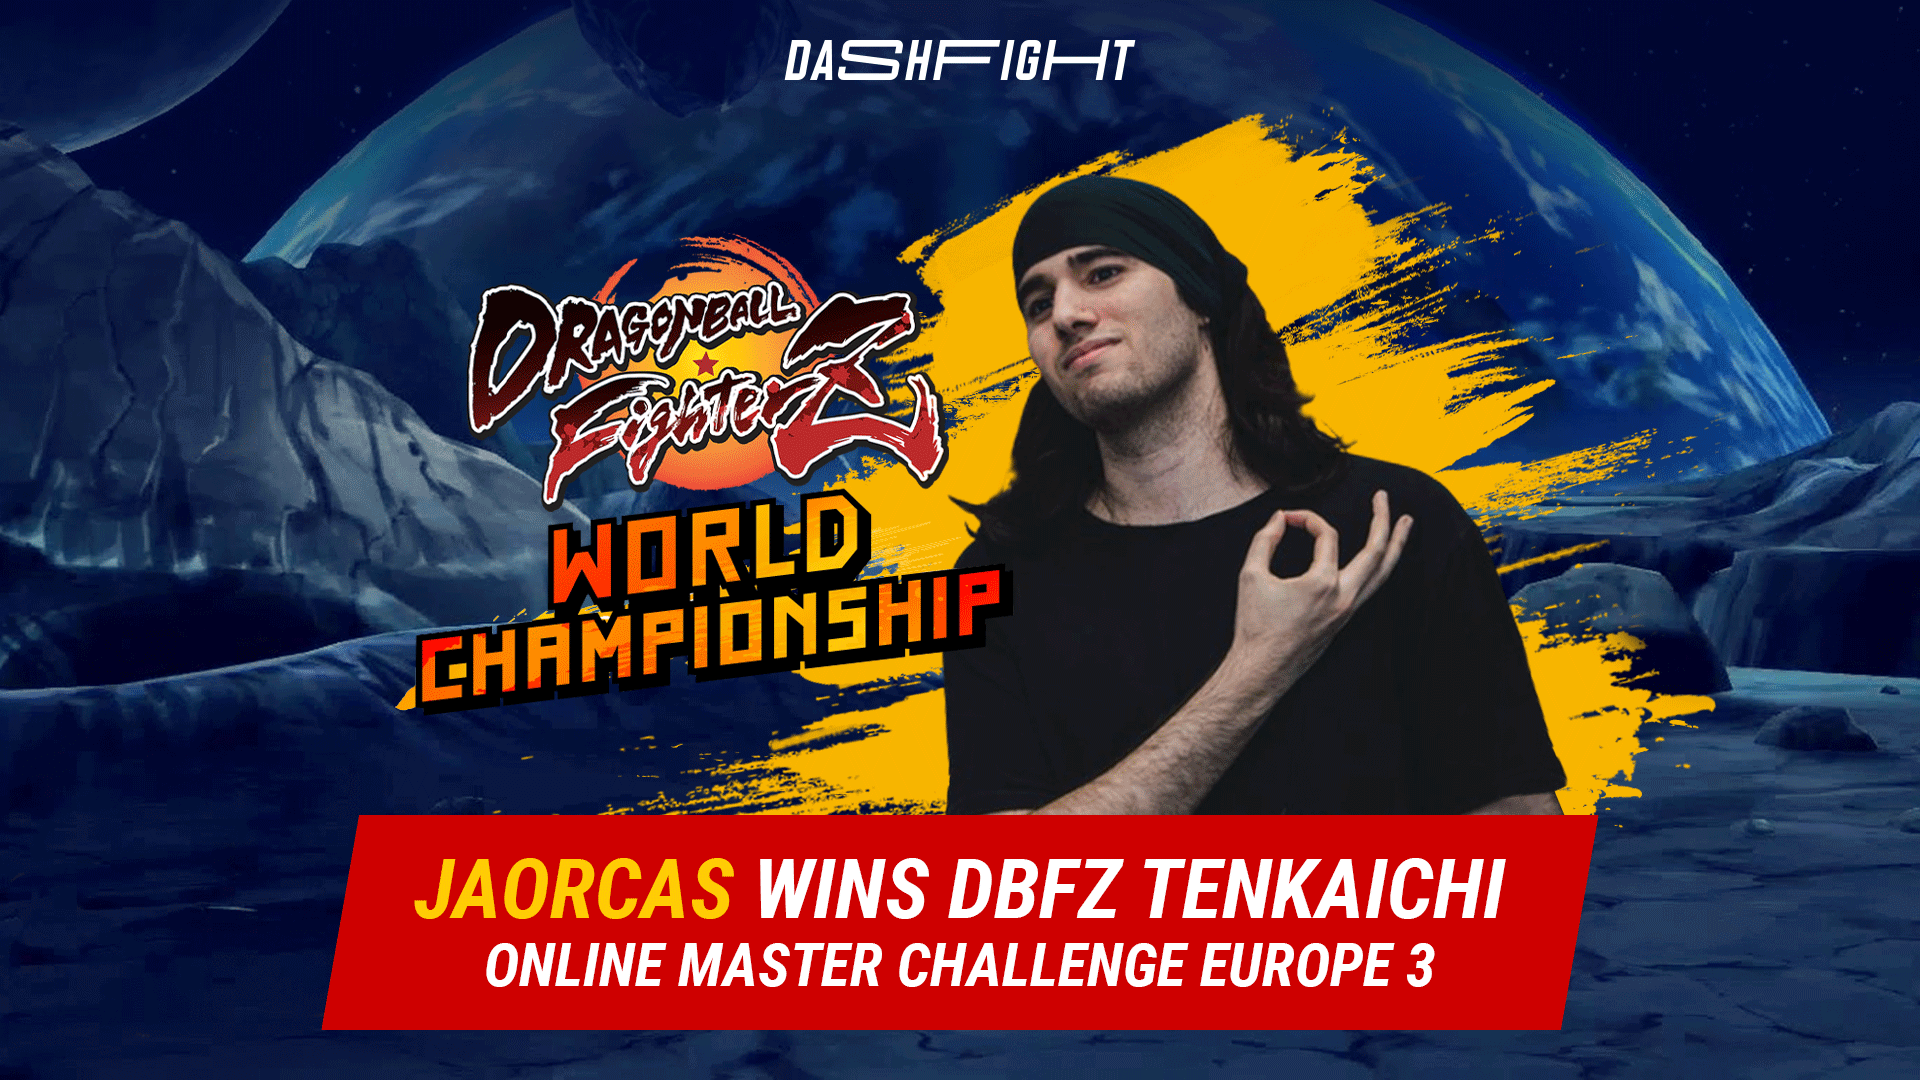 Jaorcas Wins DBFZ Tenkaichi Online Master Challenge Europe 3